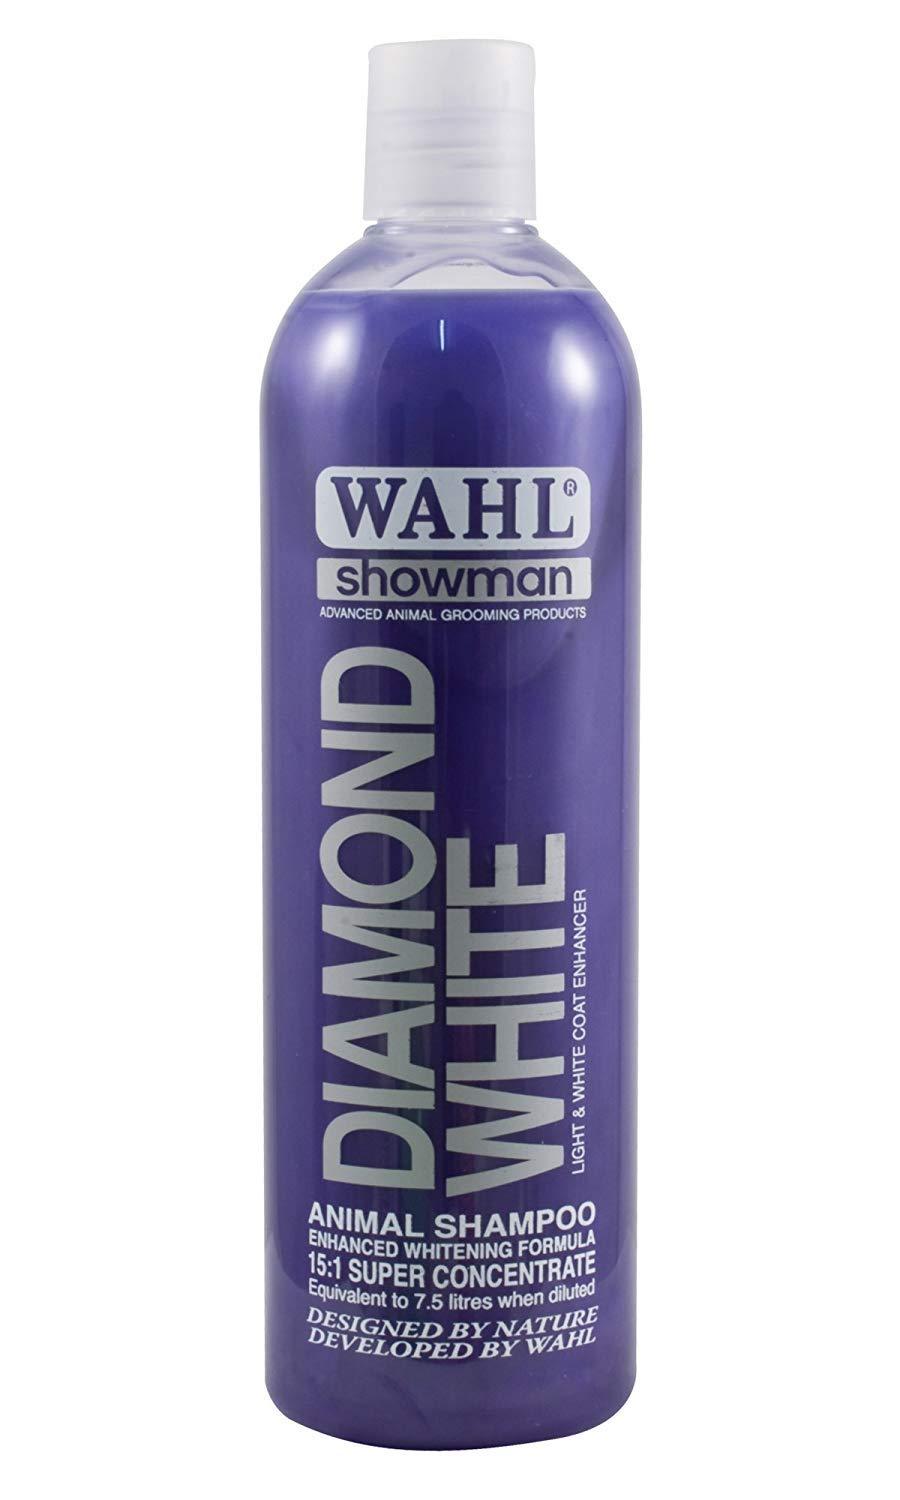 WAHL Showman Shampoo, 500 ml, Diamond White 500 ml (Pack of 1) - PawsPlanet Australia